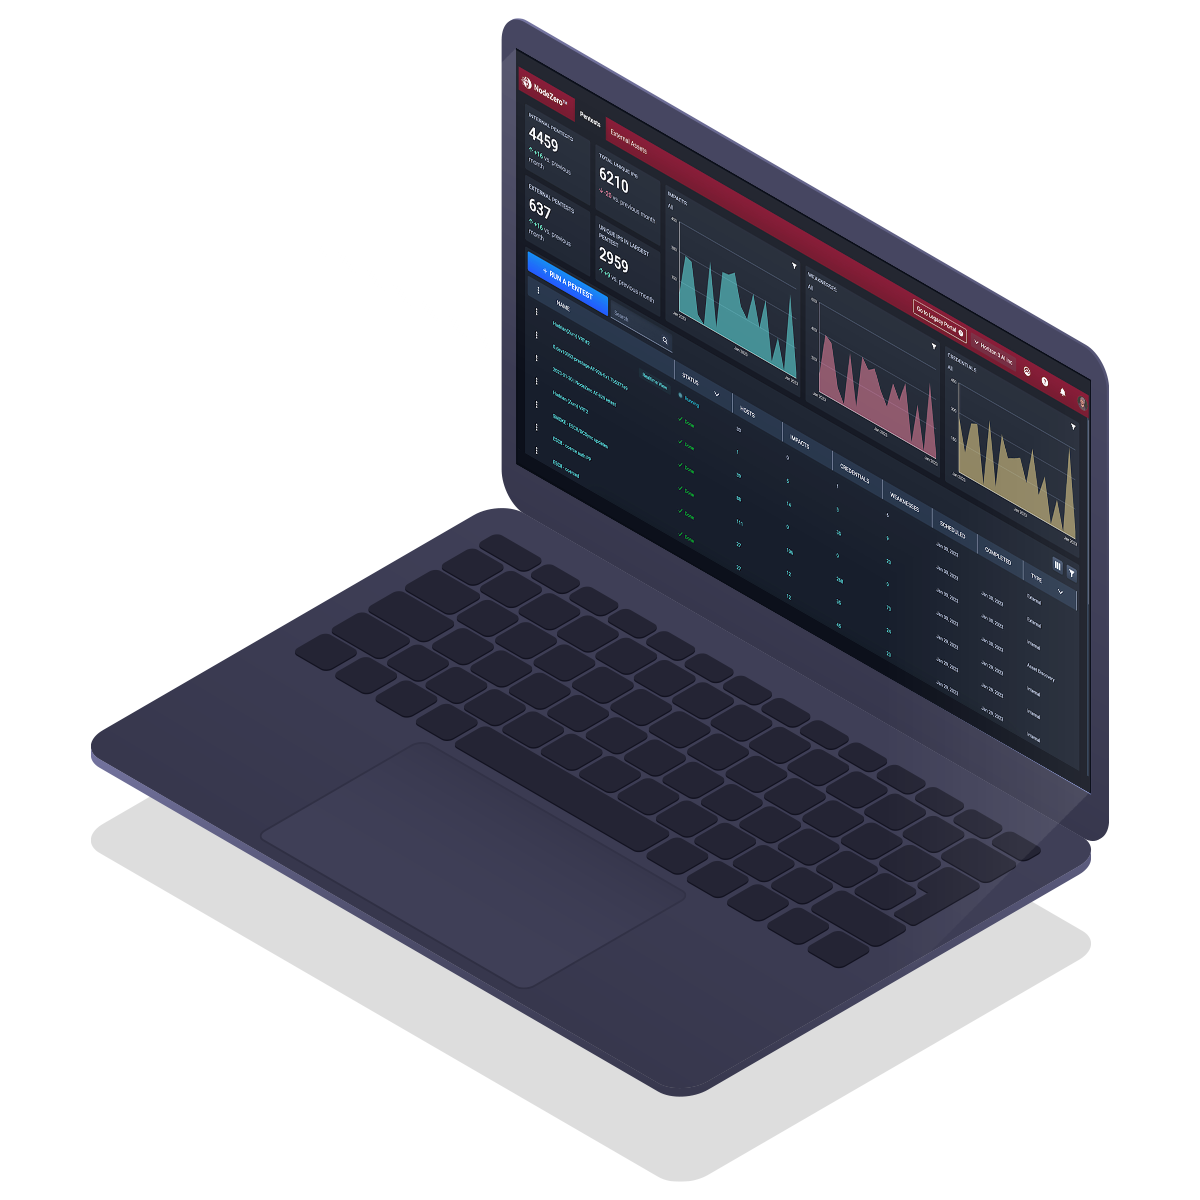 Isometric Laptop showing NodeZero UI